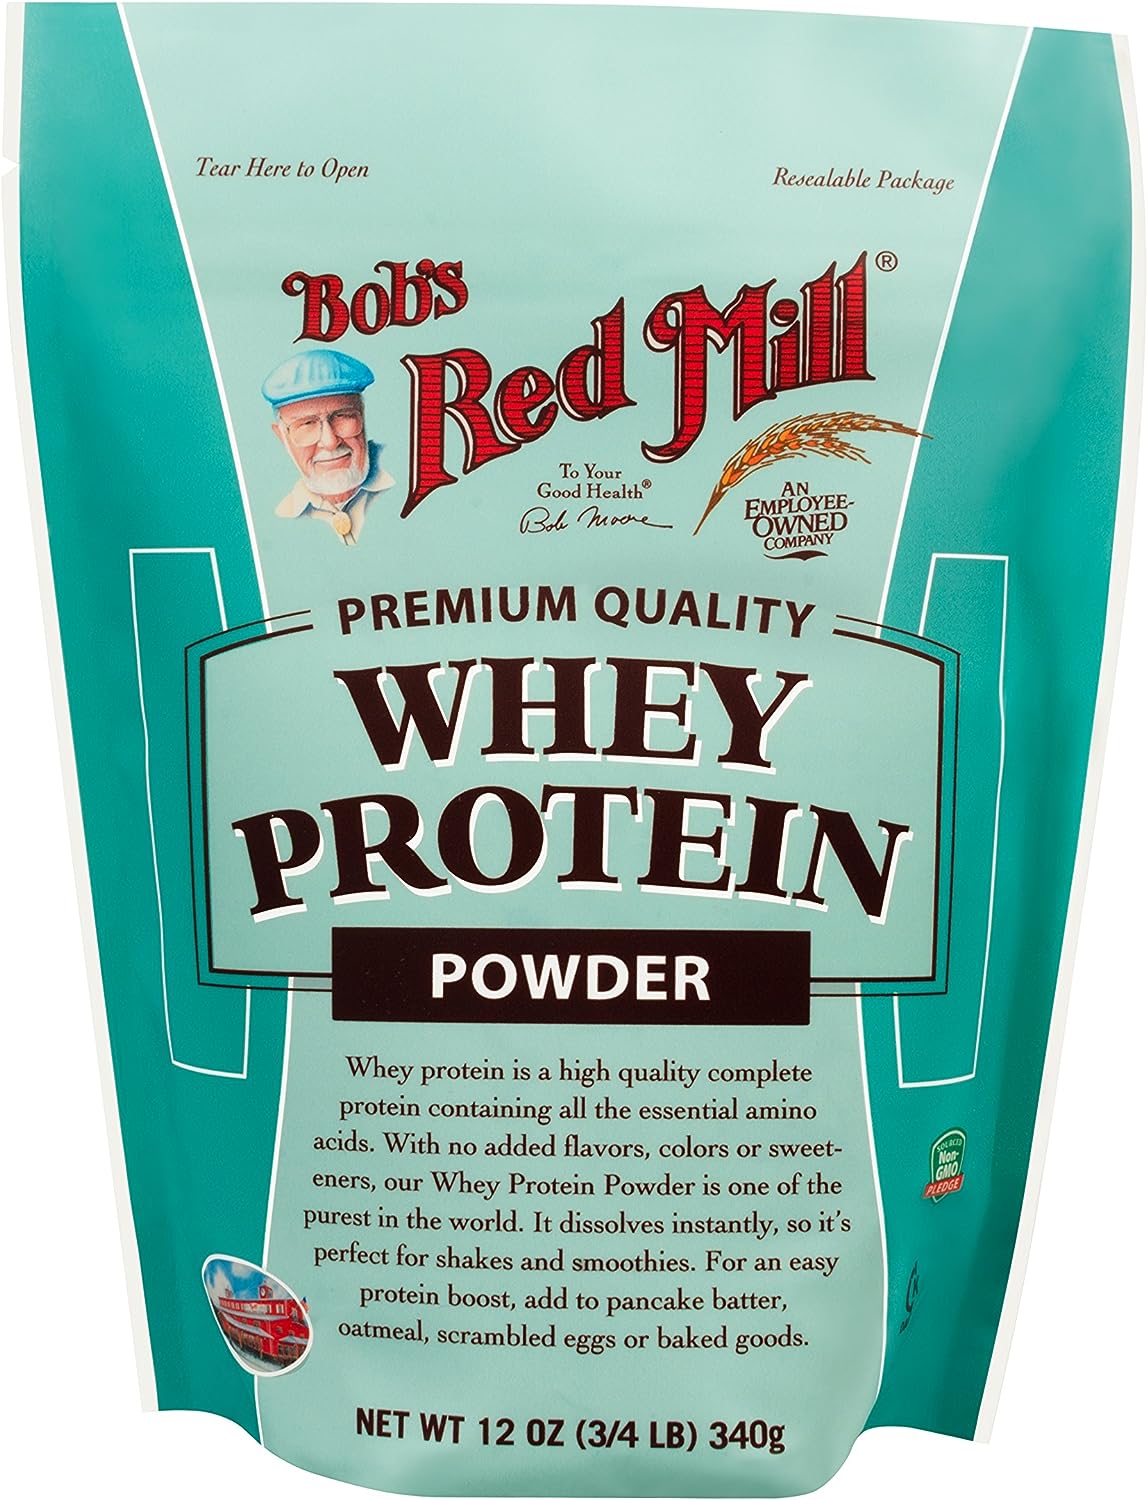 Bob's-Red-Mill-Whey-Protein-Powder-322